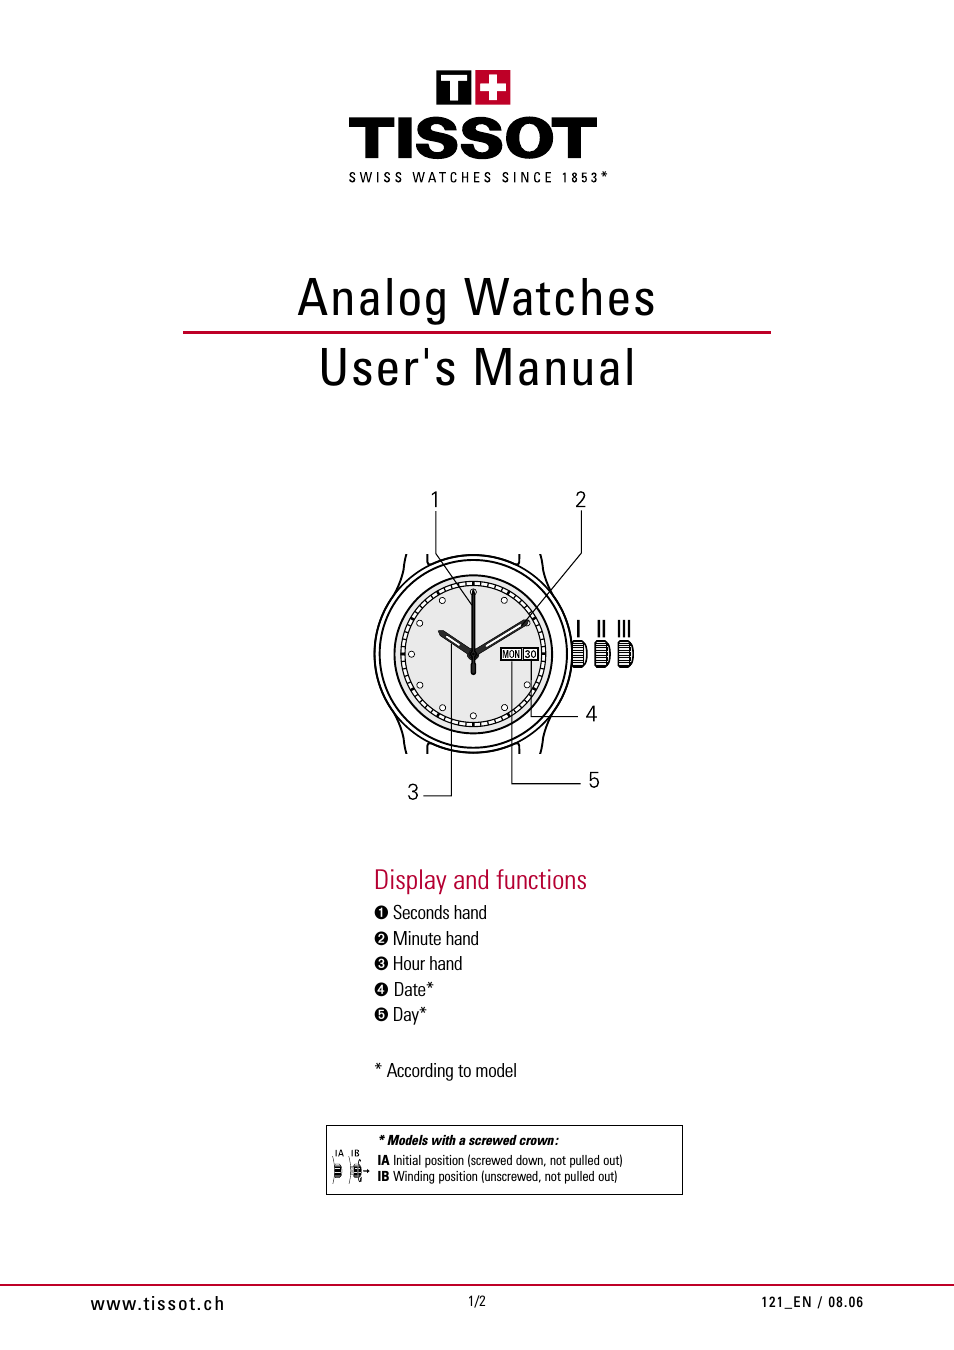 Analog Watch